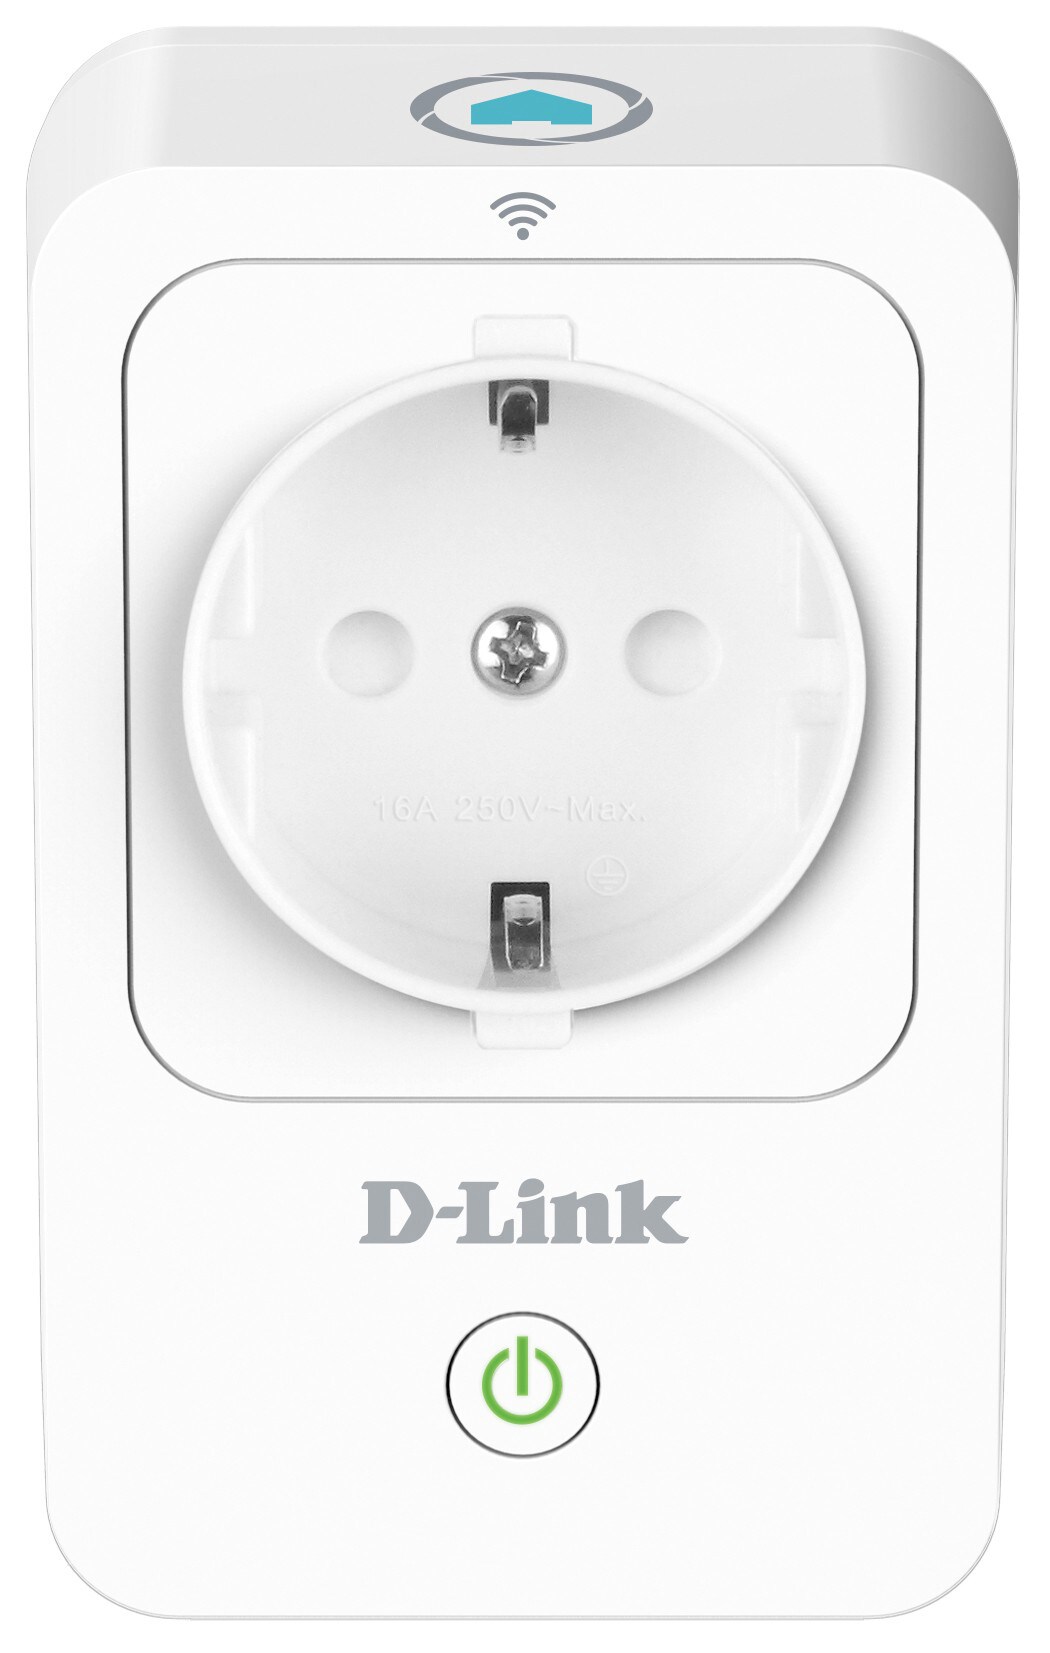 D-Link DSP-W215 Smart Plug pistorasia - Gigantti verkkokauppa